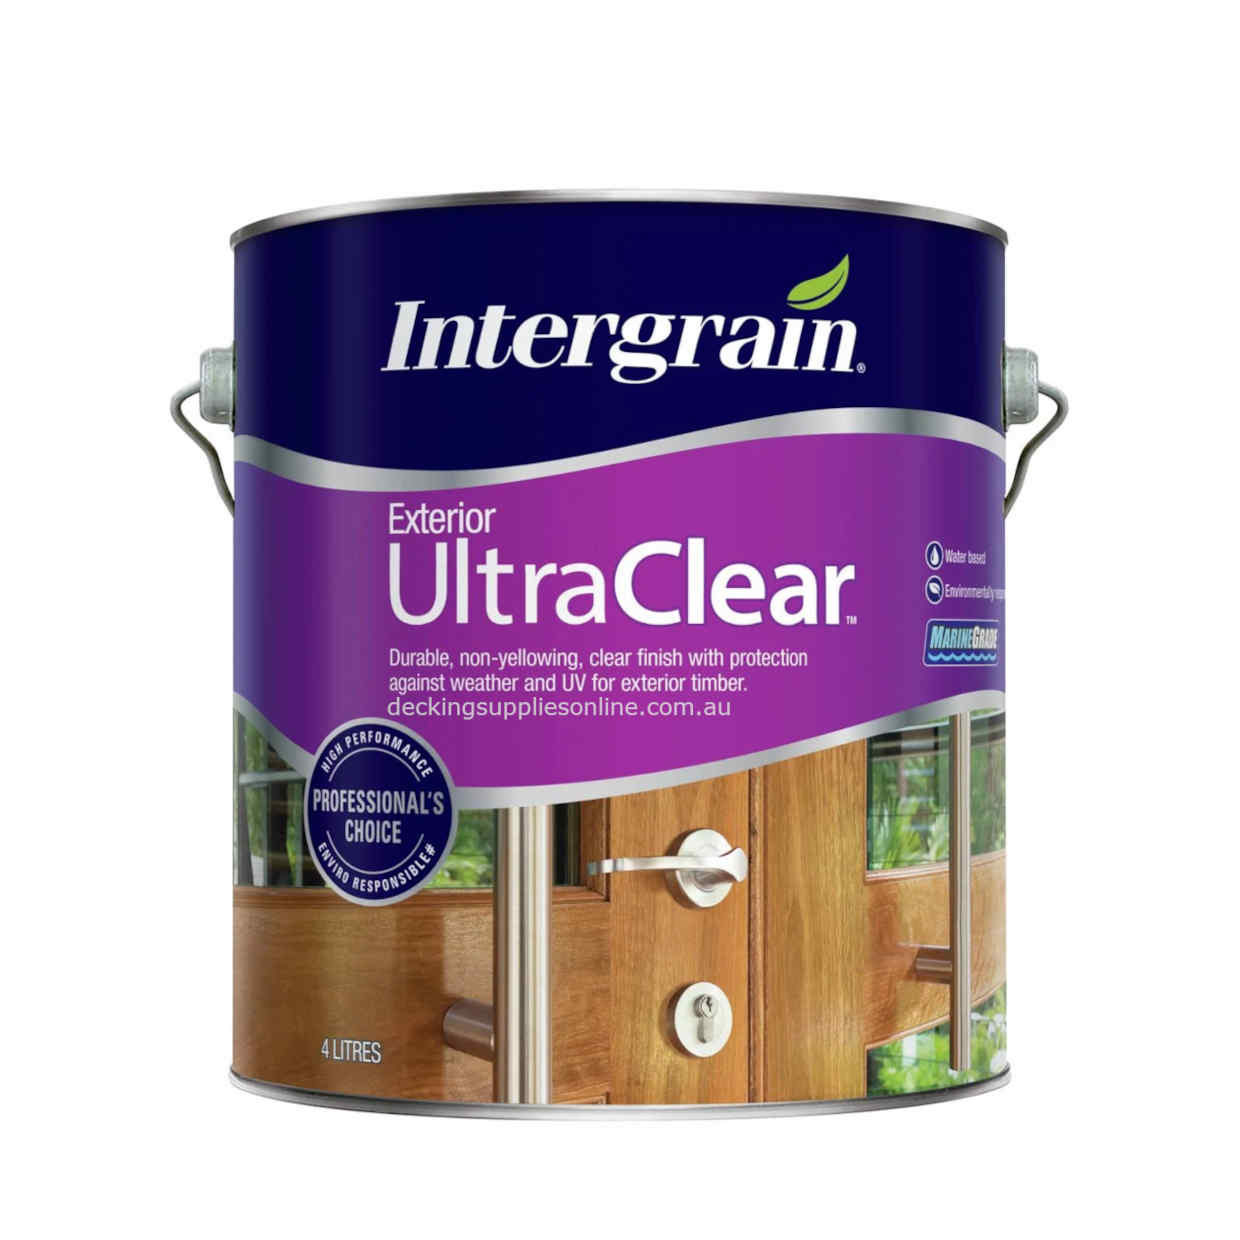 Intergrain_UltraClear_4_Litre_Decking_Supplies_Online